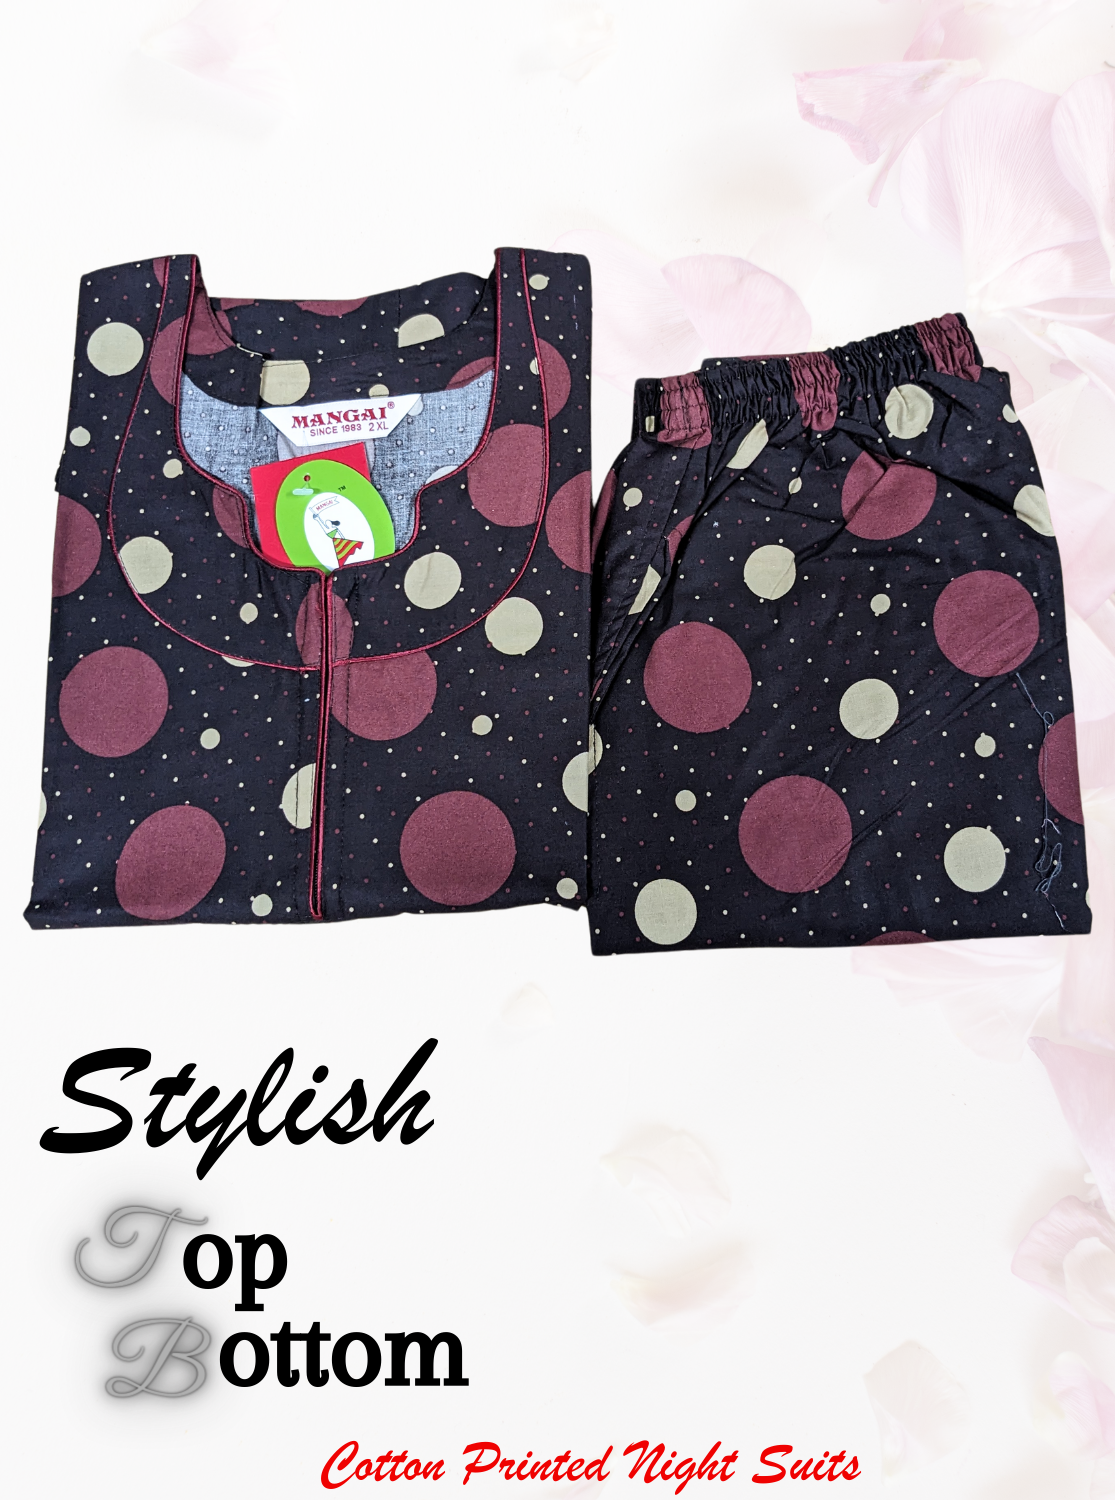 MANGAI Premium Cotton Printed Stylish Night Suits- Stylish Printed Top & Bottom Set for Trendy Women's